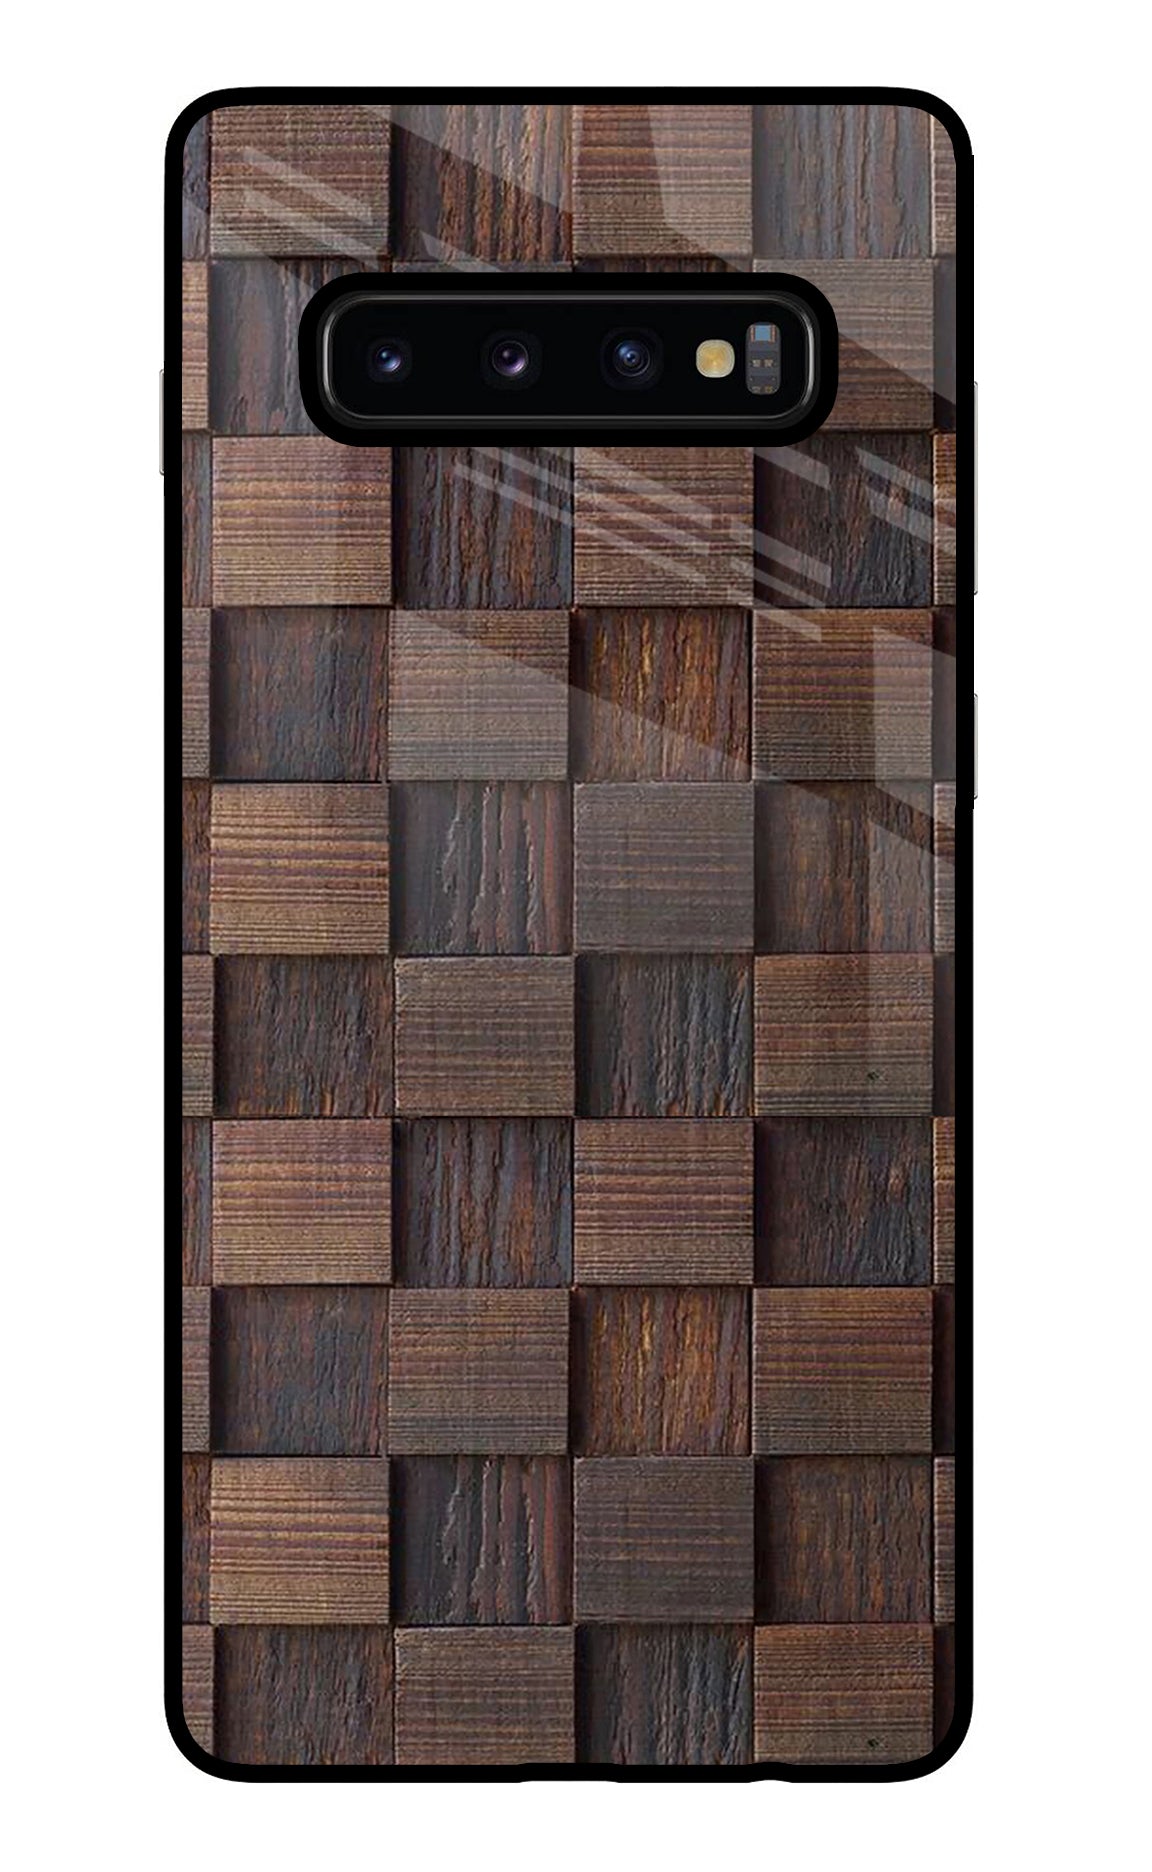 Wooden Cube Design Samsung S10 Plus Glass Case